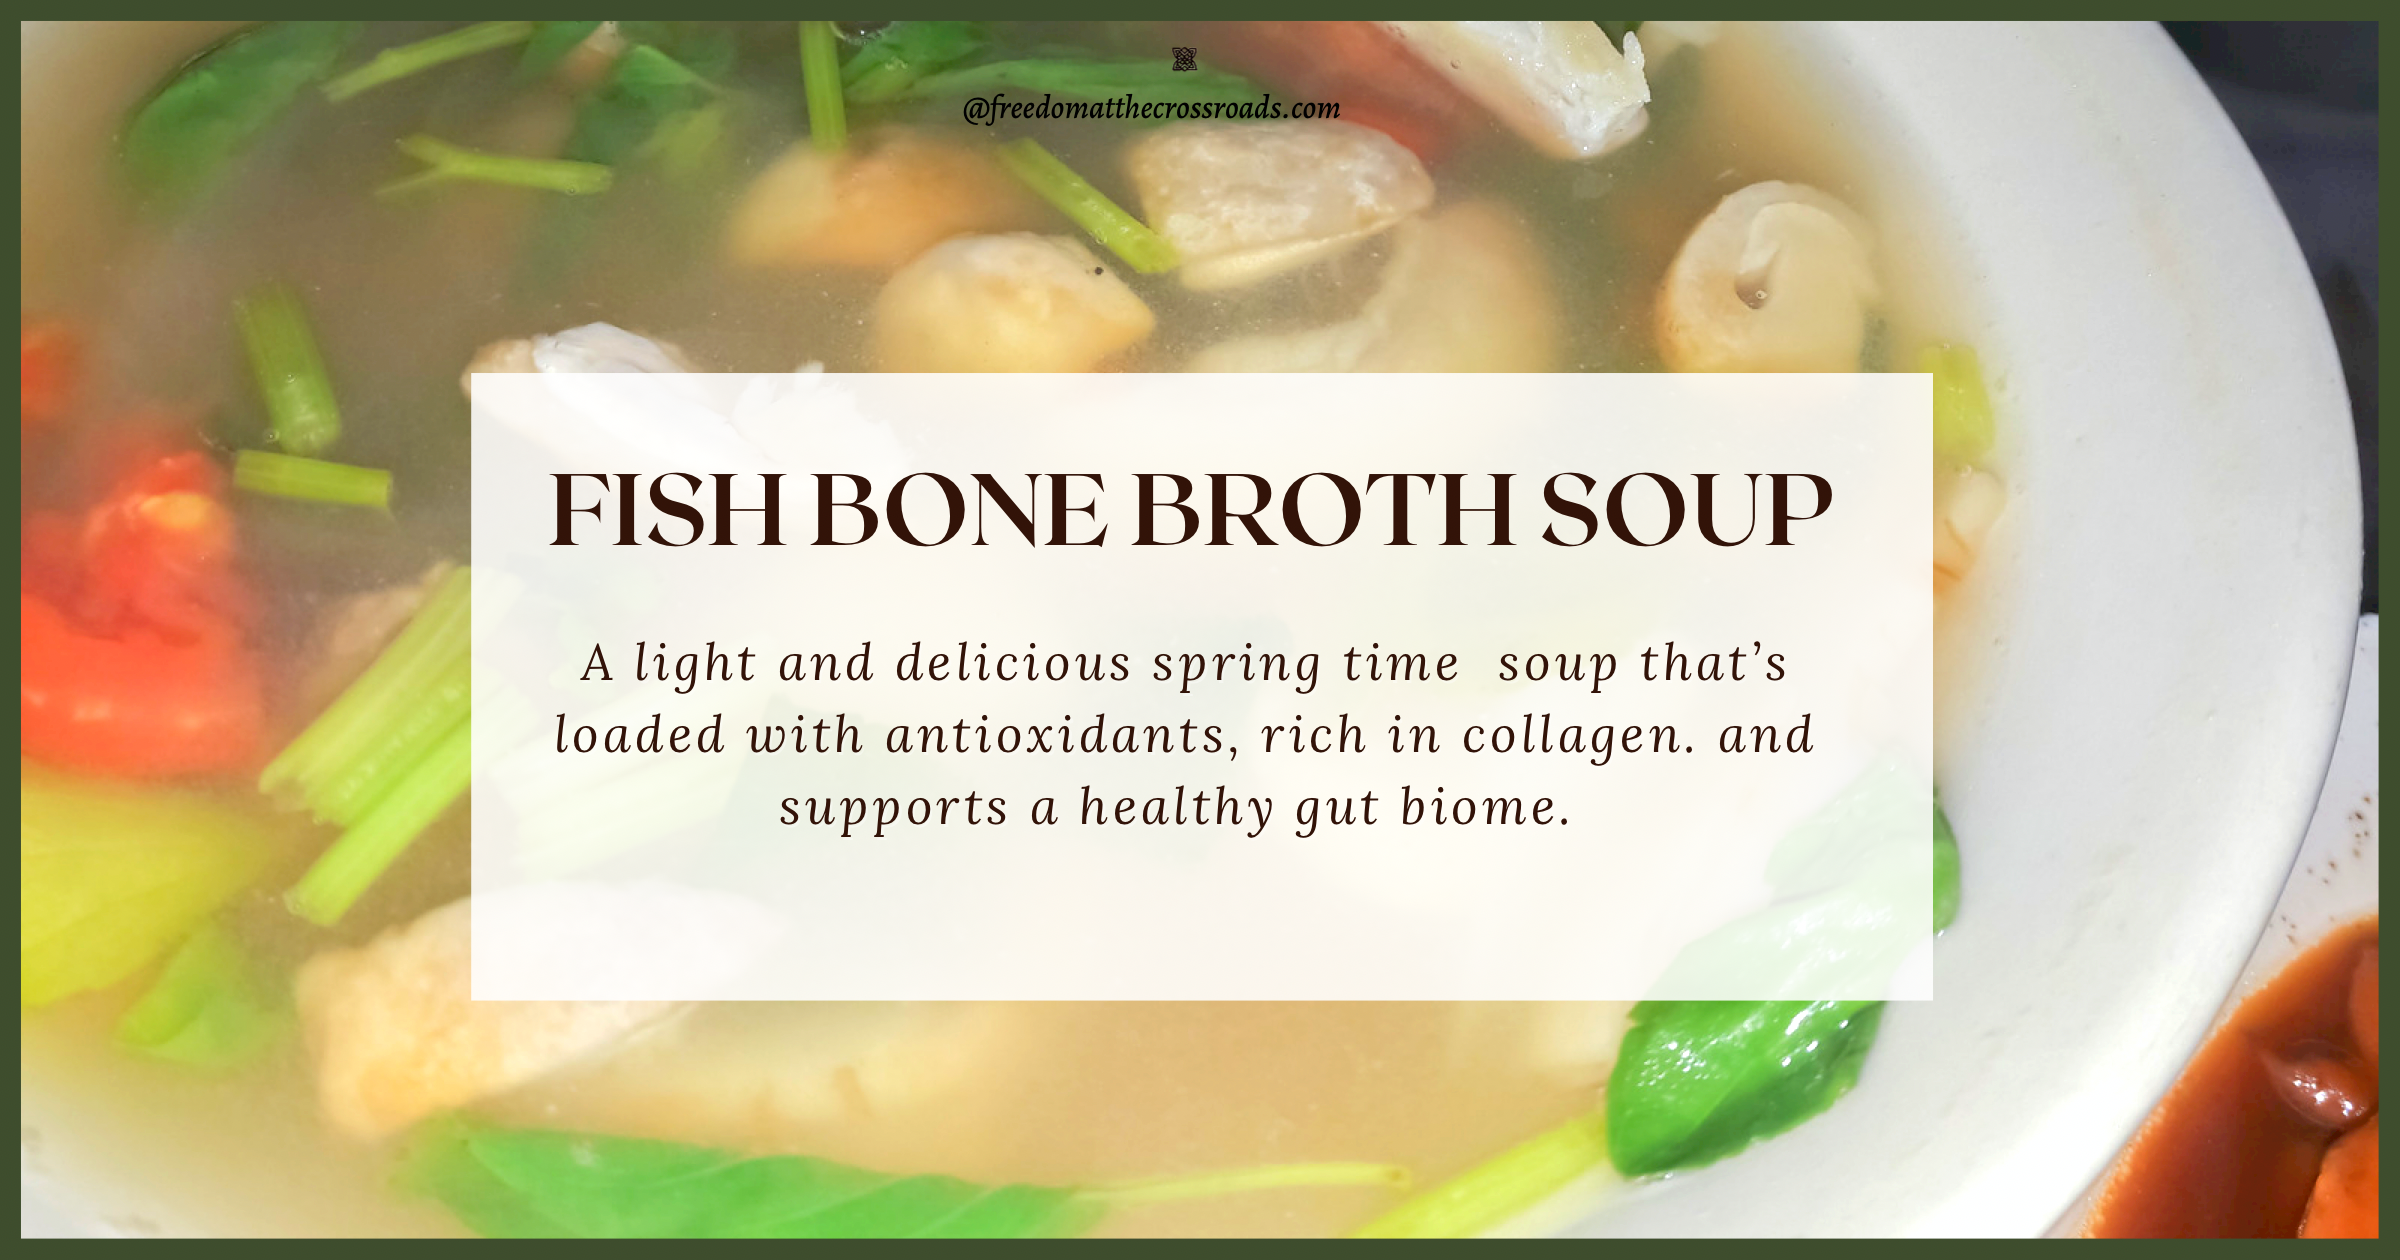 Fish bone broth soup blog feature image